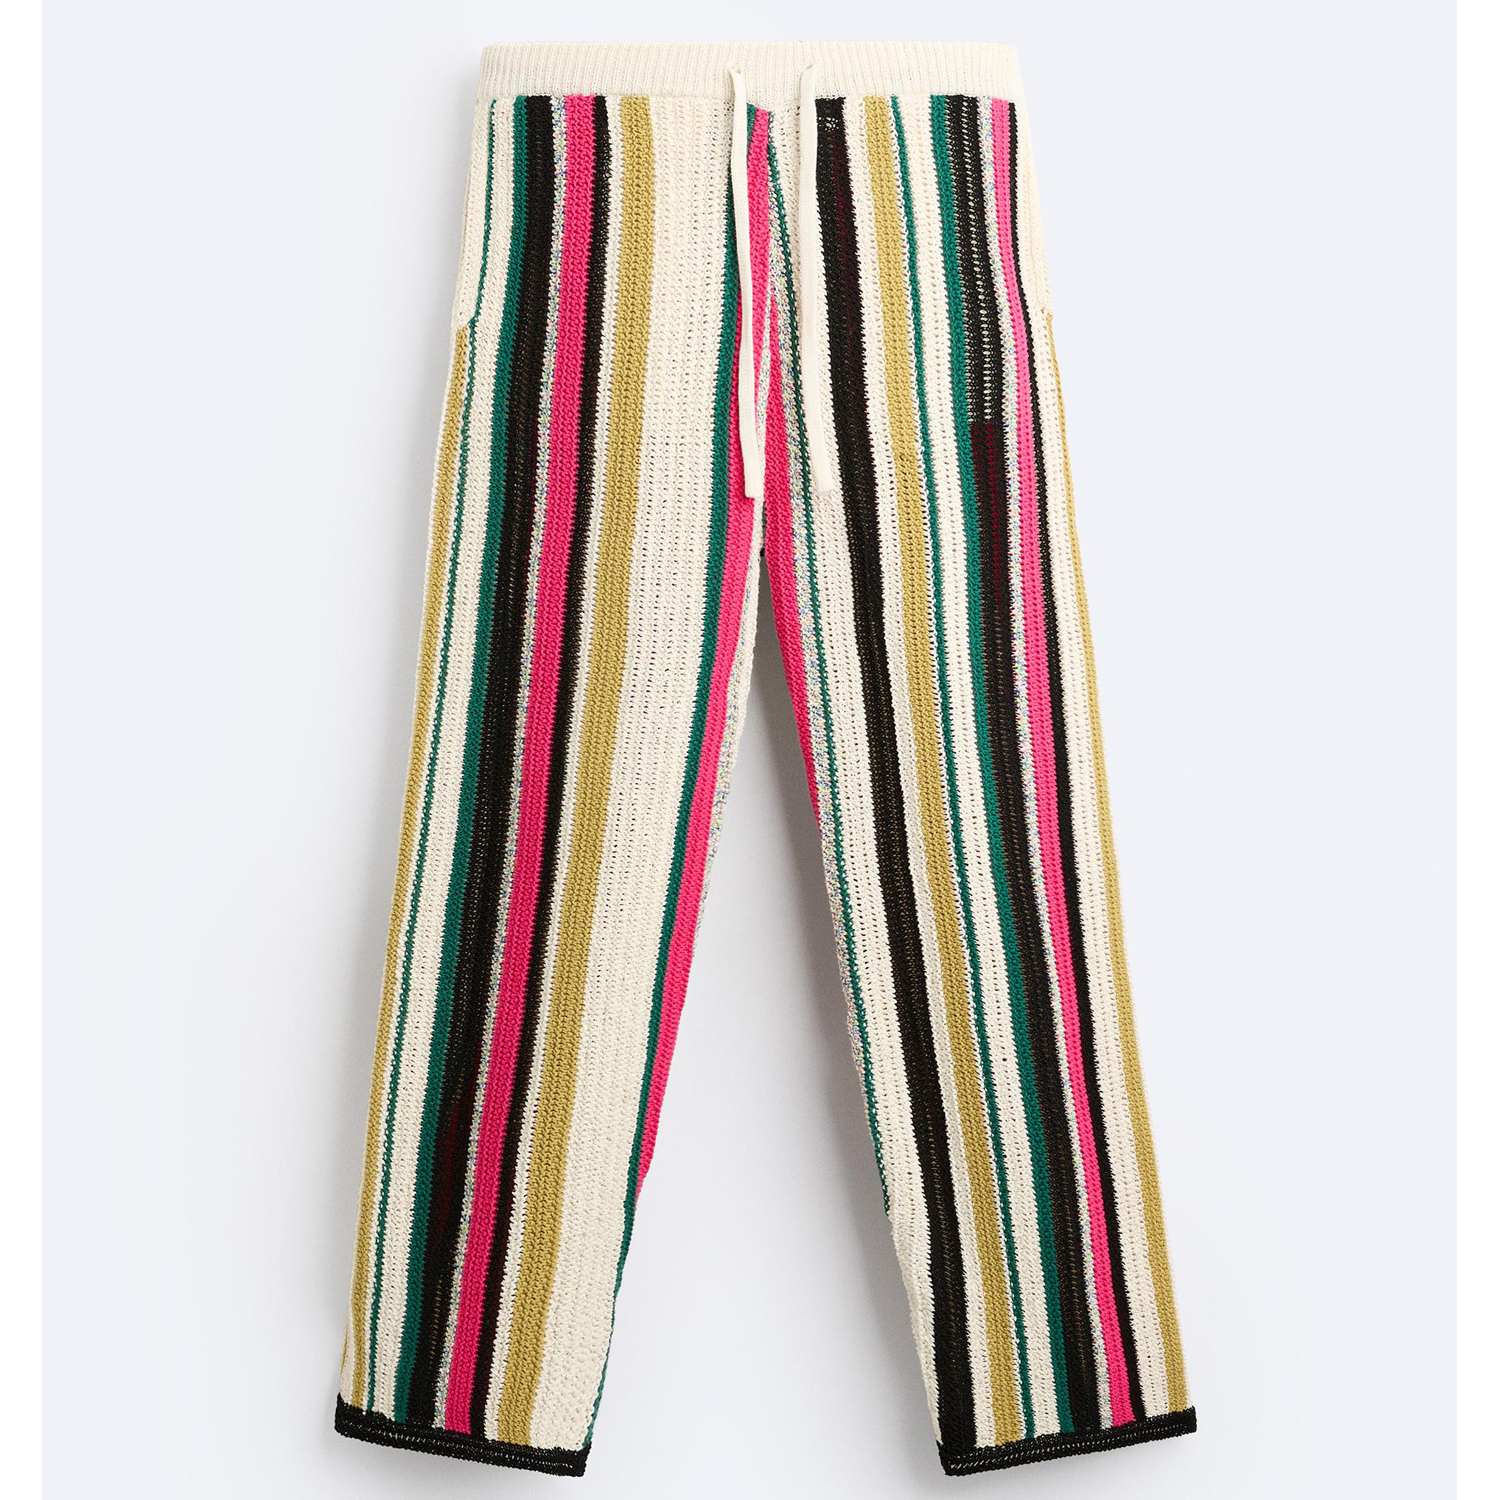 Брюки Zara Striped Knit - Limited Edition, мультиколор футболка поло zara crochet knit limited edition темно бежевый